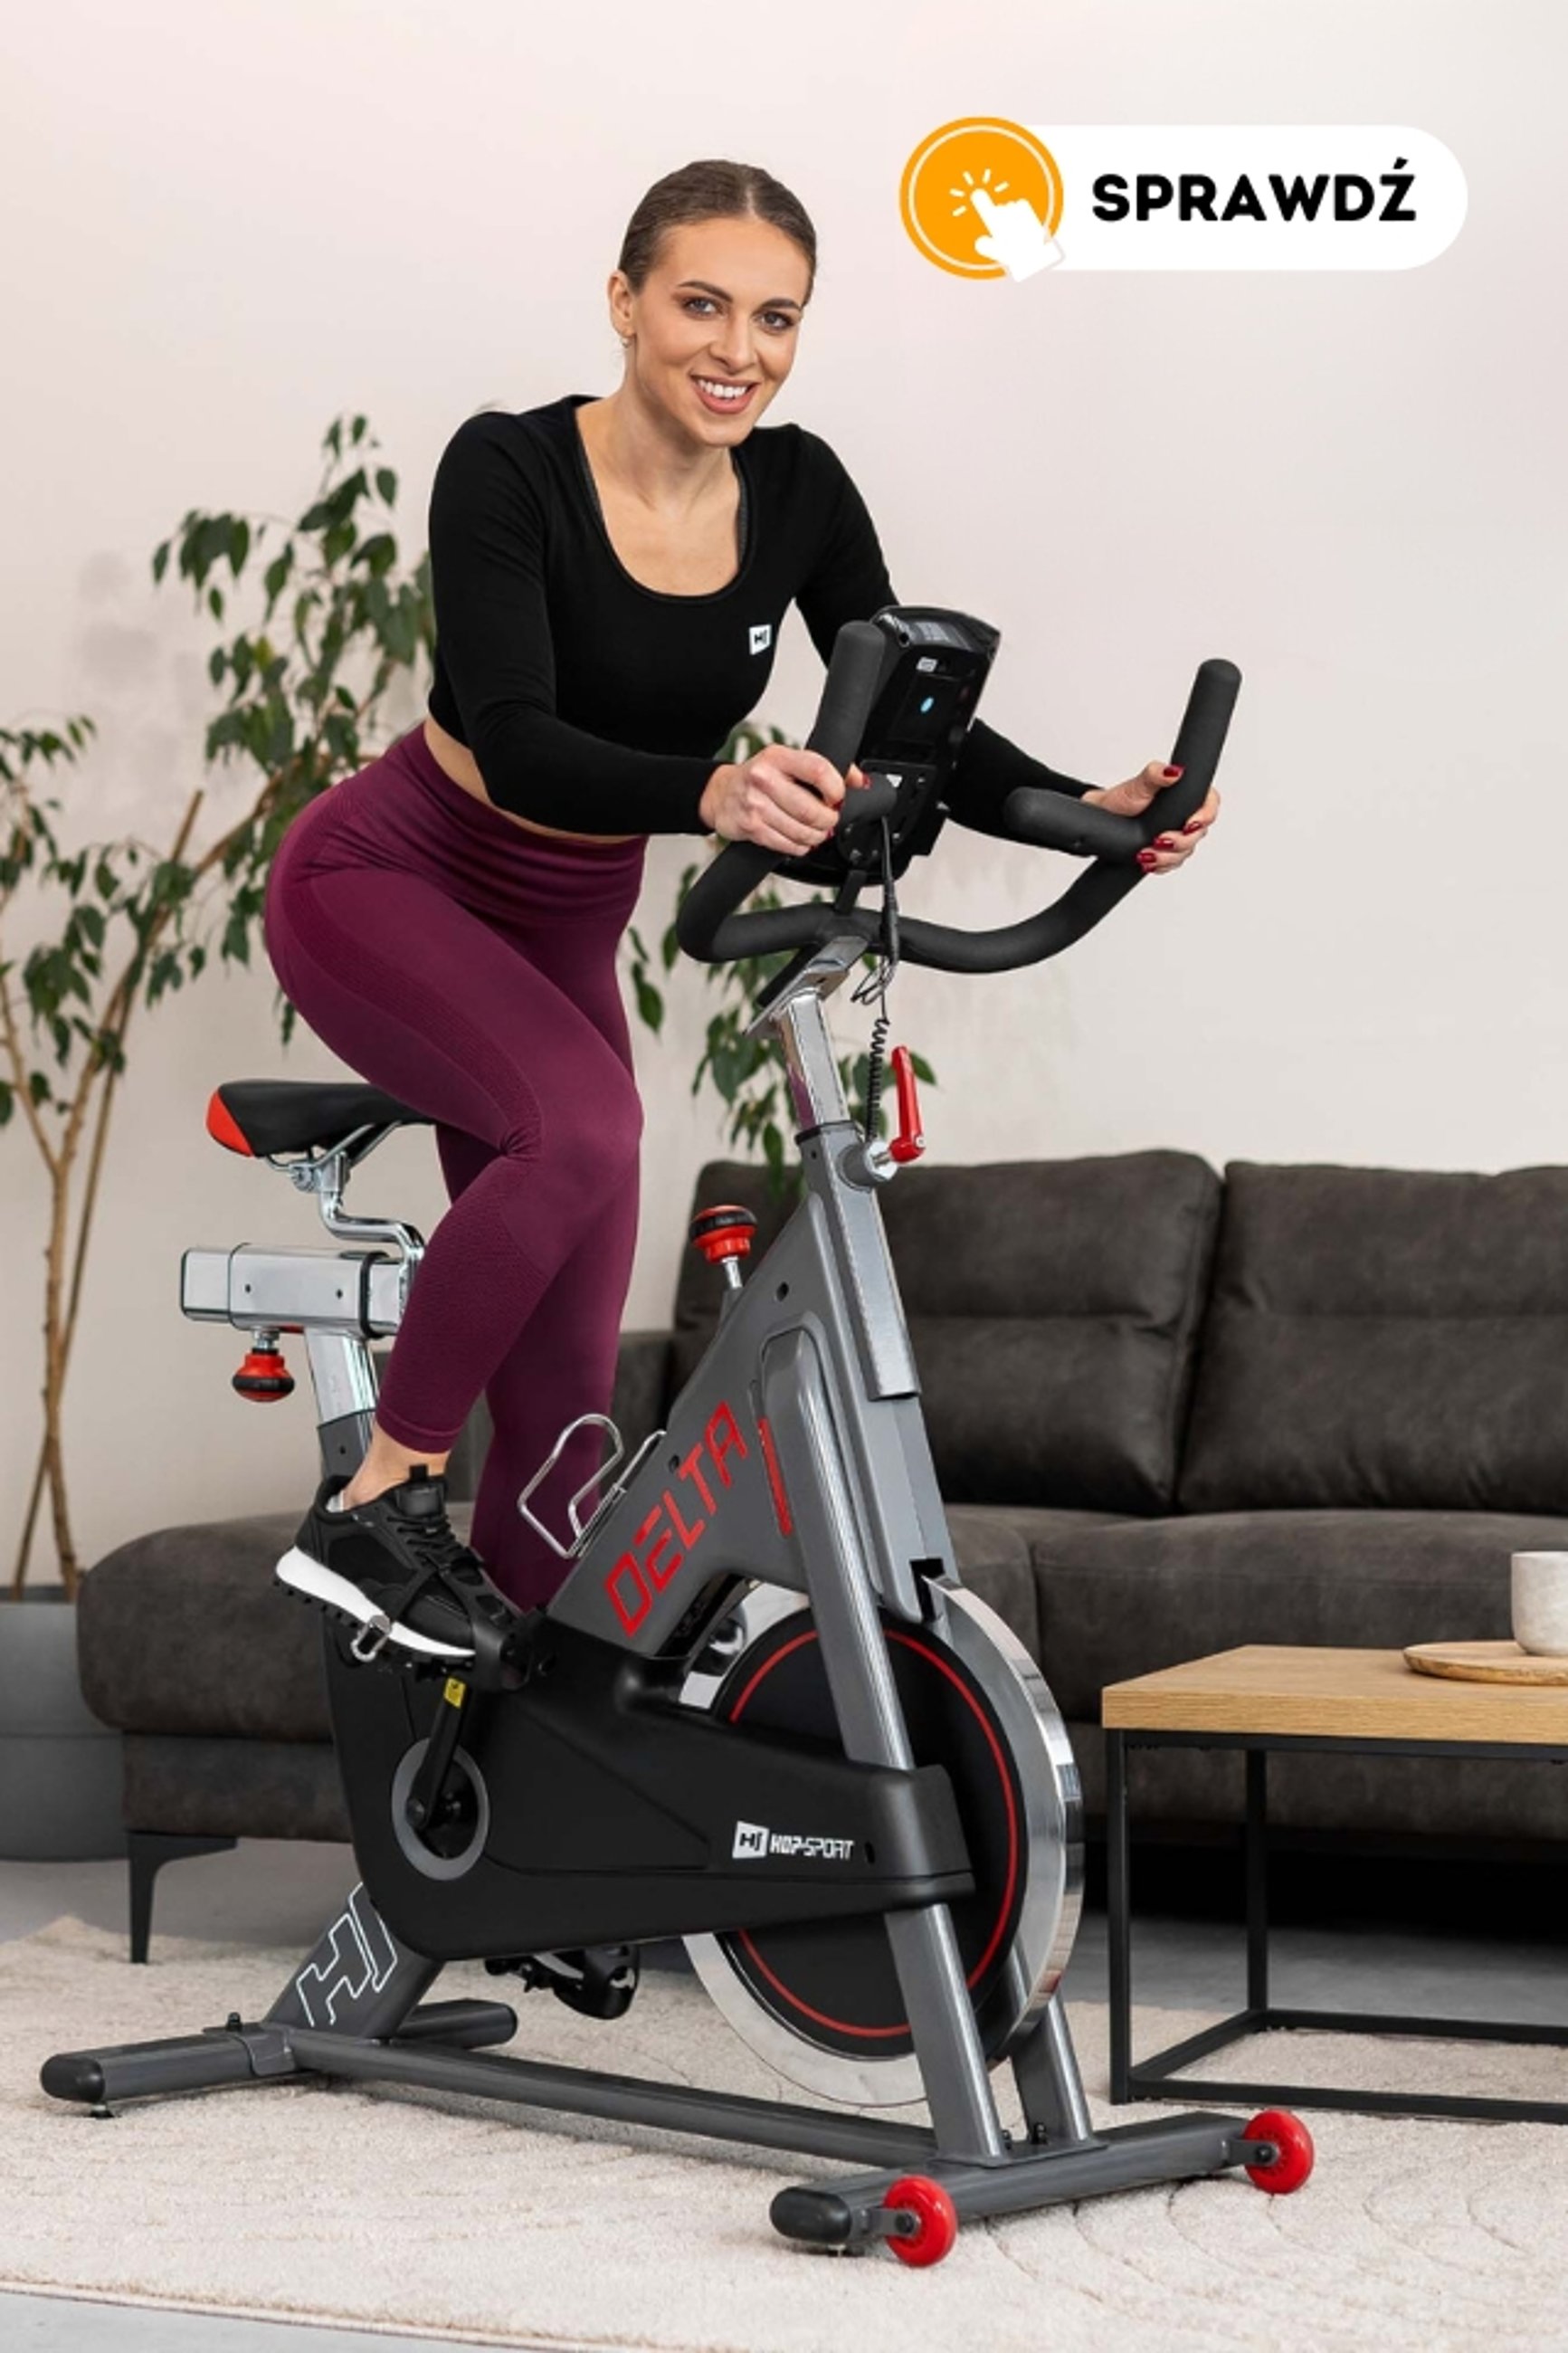 modelka trenująca indoor cycling na rowerze treningowym spinningowym HS-065IC Delta marki Hop-Sport